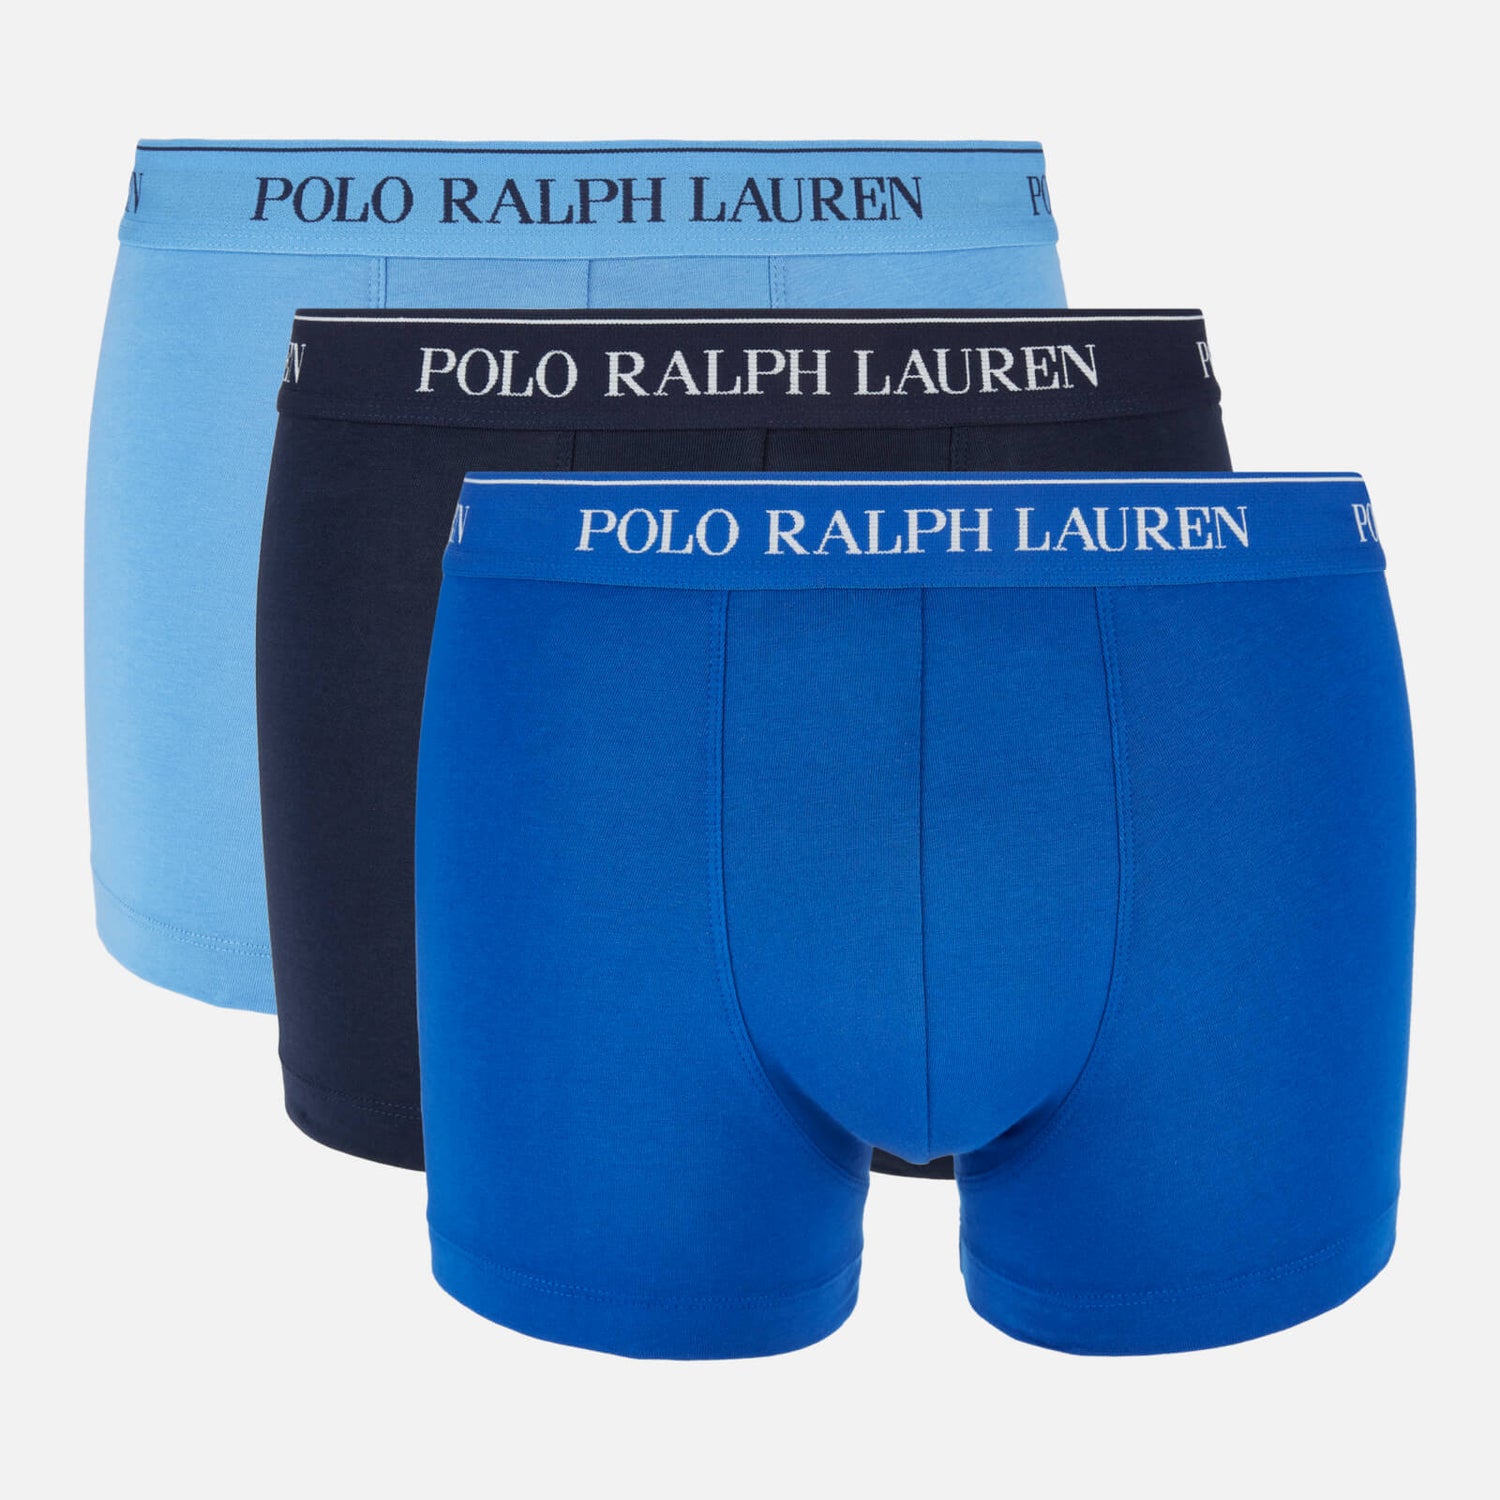 Polo Ralph Lauren Men's Classic 3 Pack Trunks - Cruise Navy/Saphire Star/Bermuda Blue - M